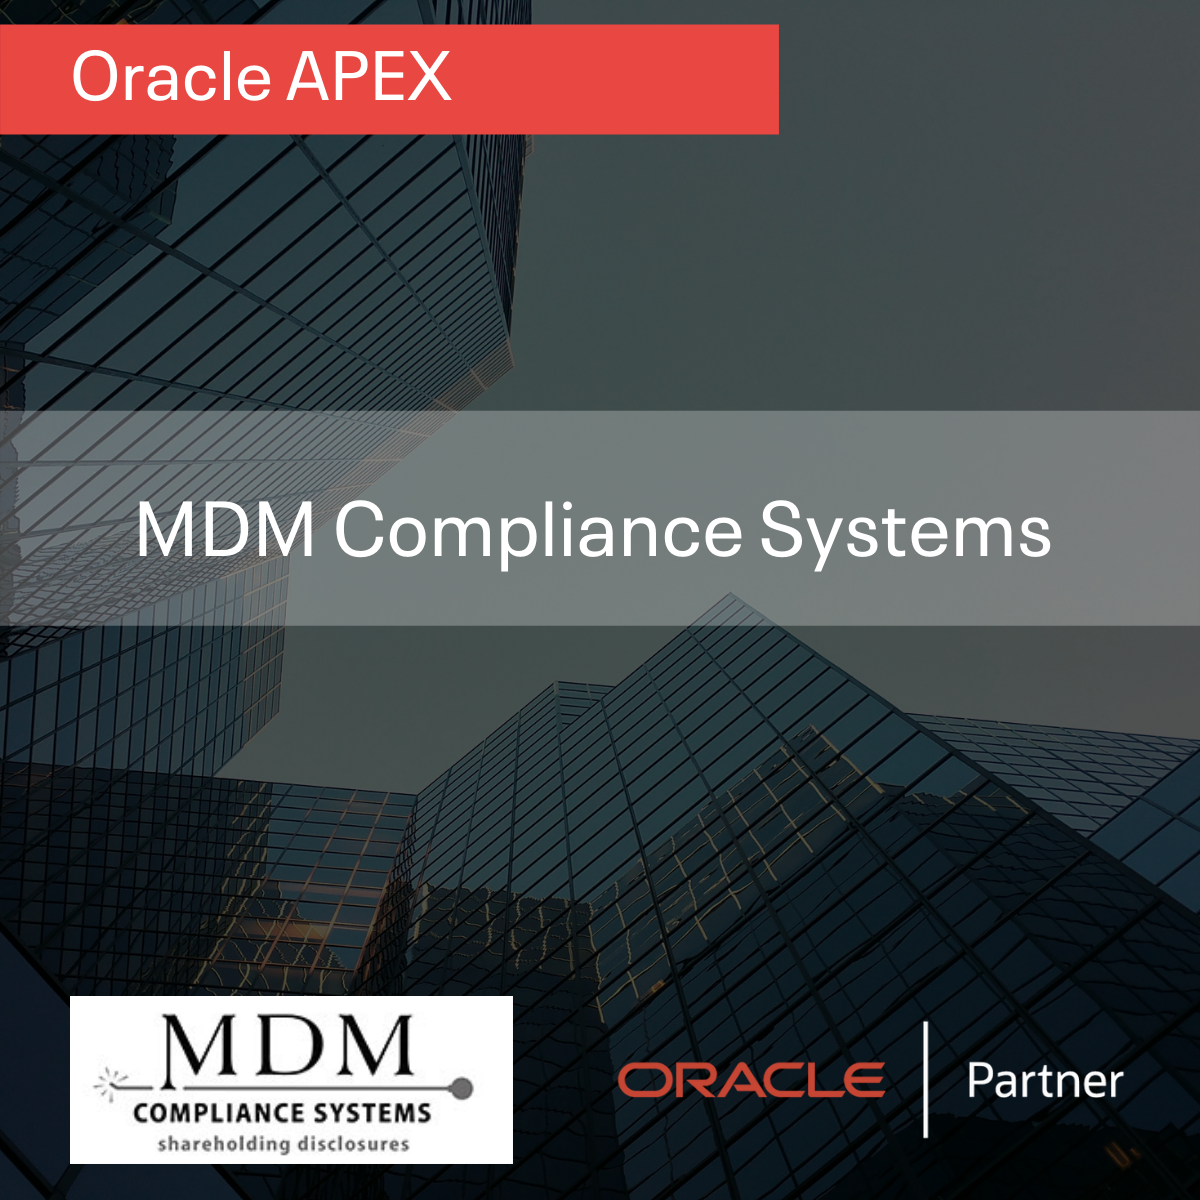 Oracle APEX case study 